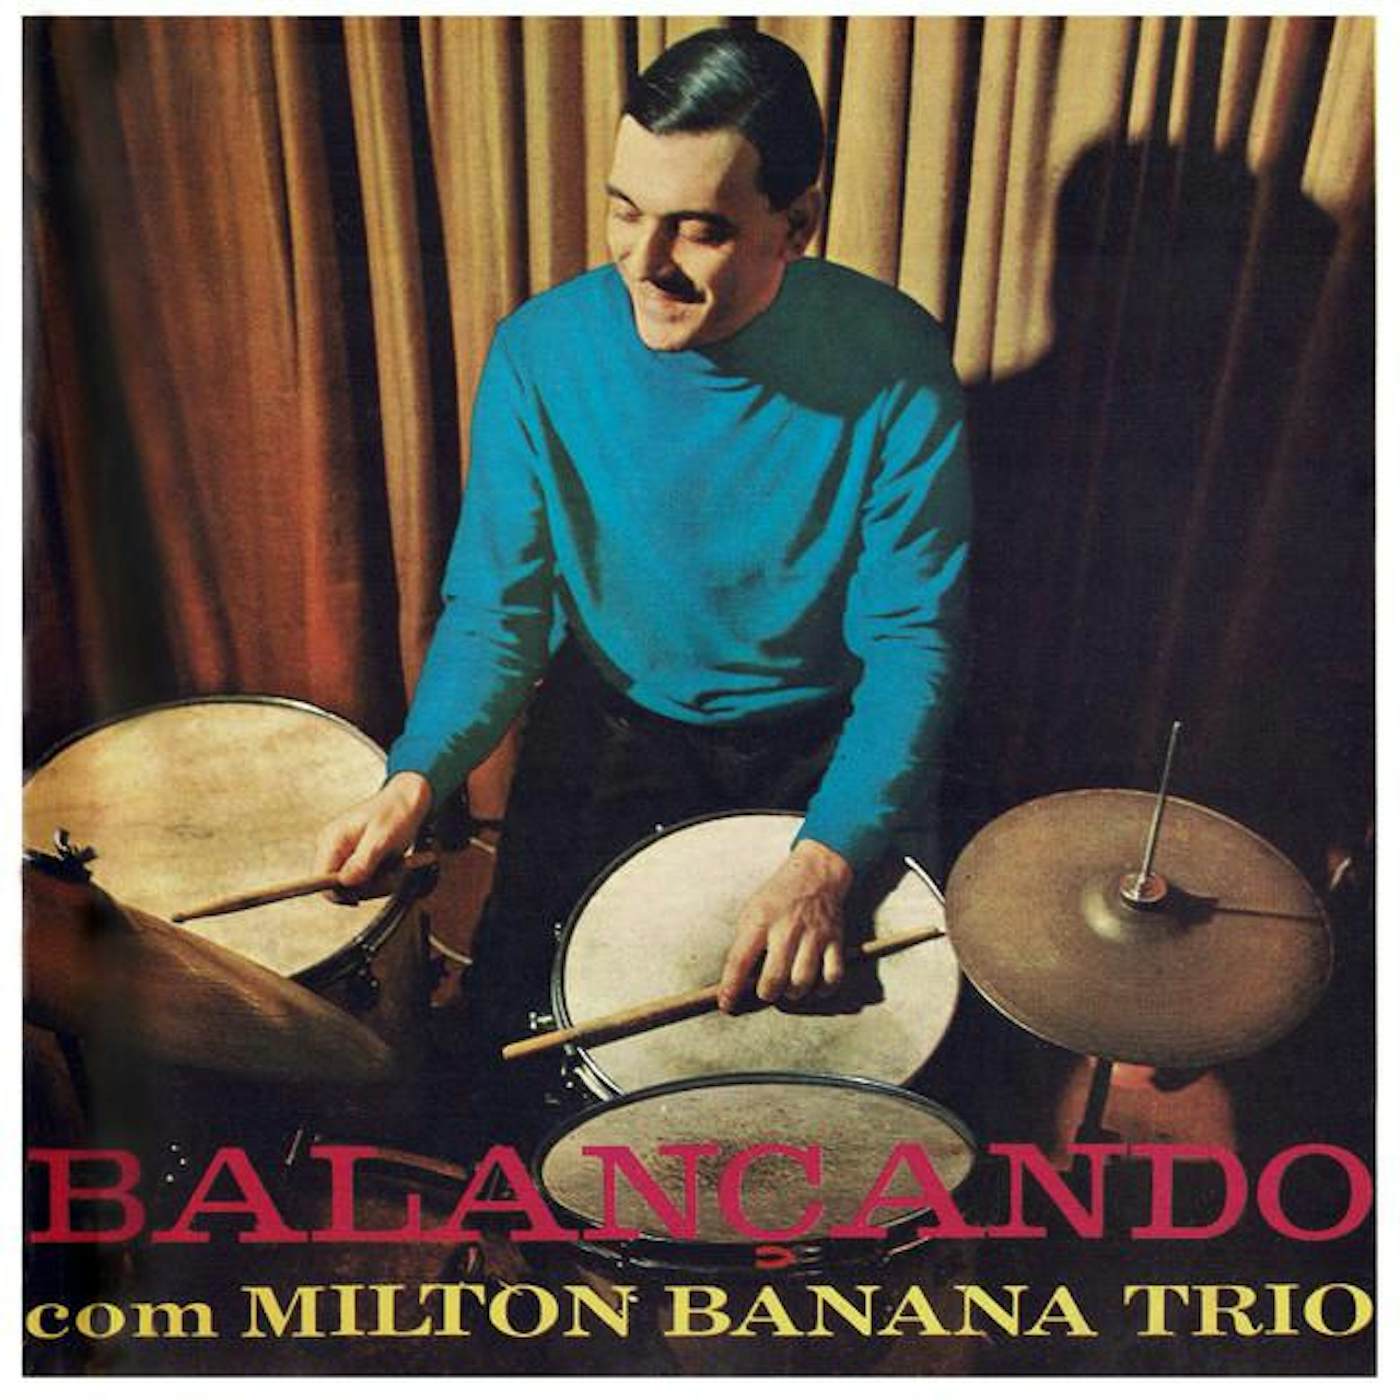 Milton Banana Trio